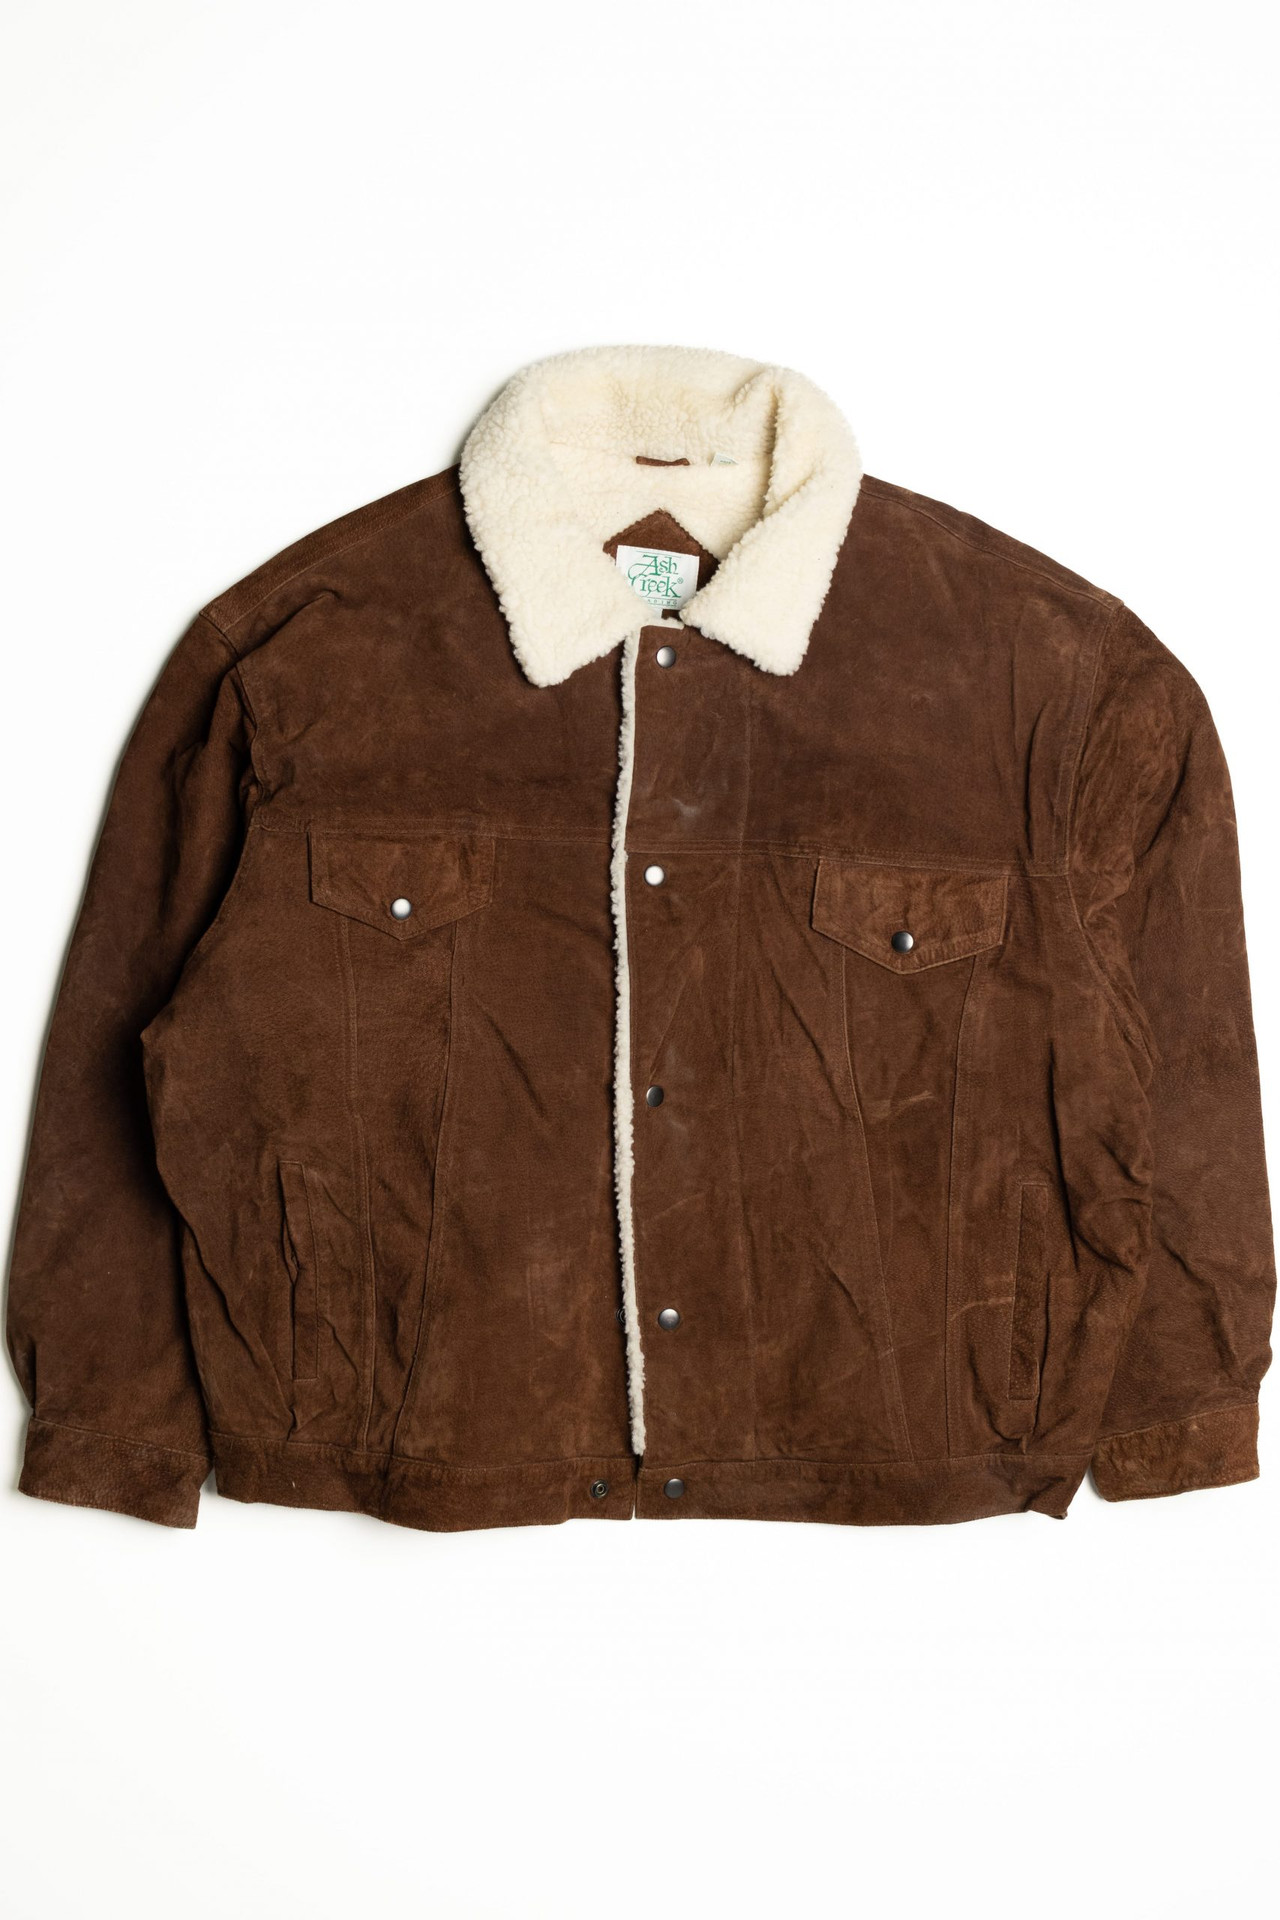 Vintage Ash Creek Trading Winter Coat - Ragstock.com